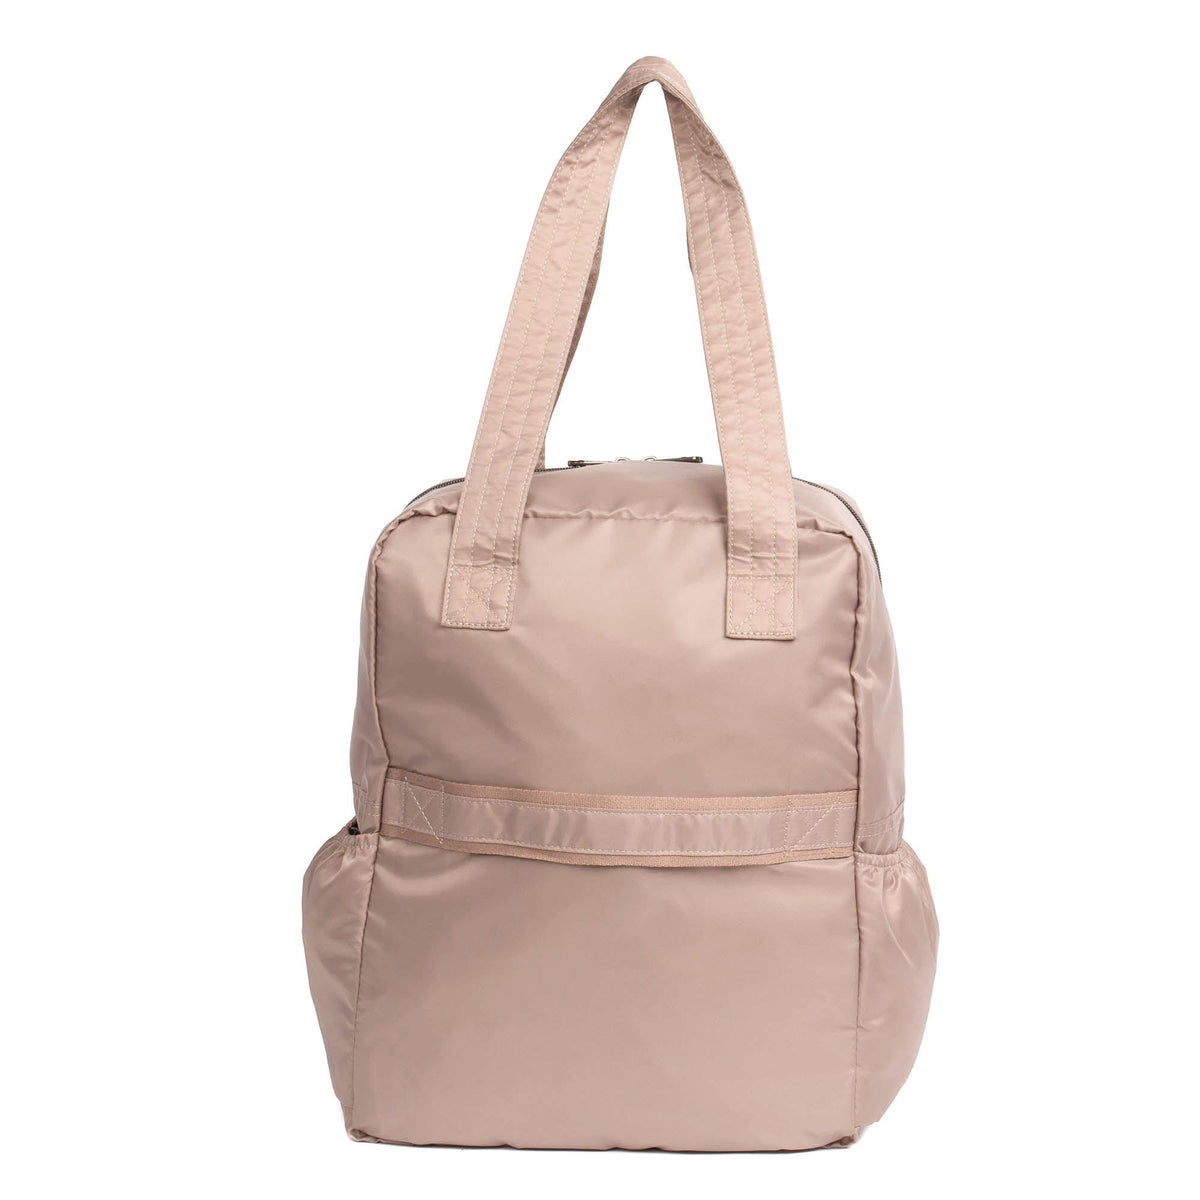 Ranger XL Packable Tote Bag